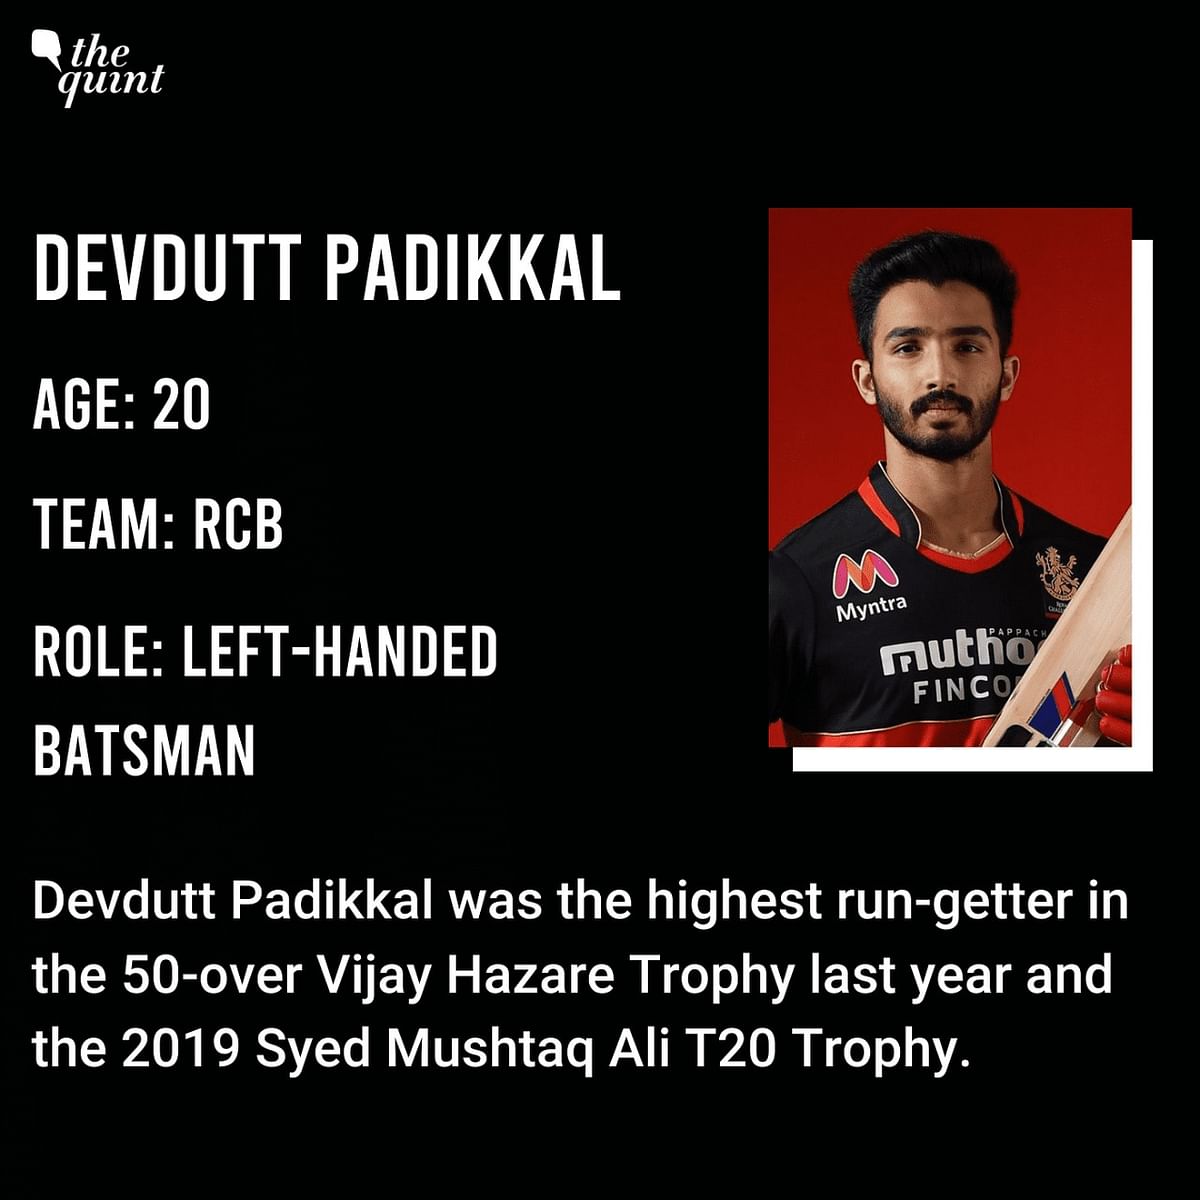 RCB’s 20-year-old opener Devdutt Padikkal scored a half century on his IPL debut.